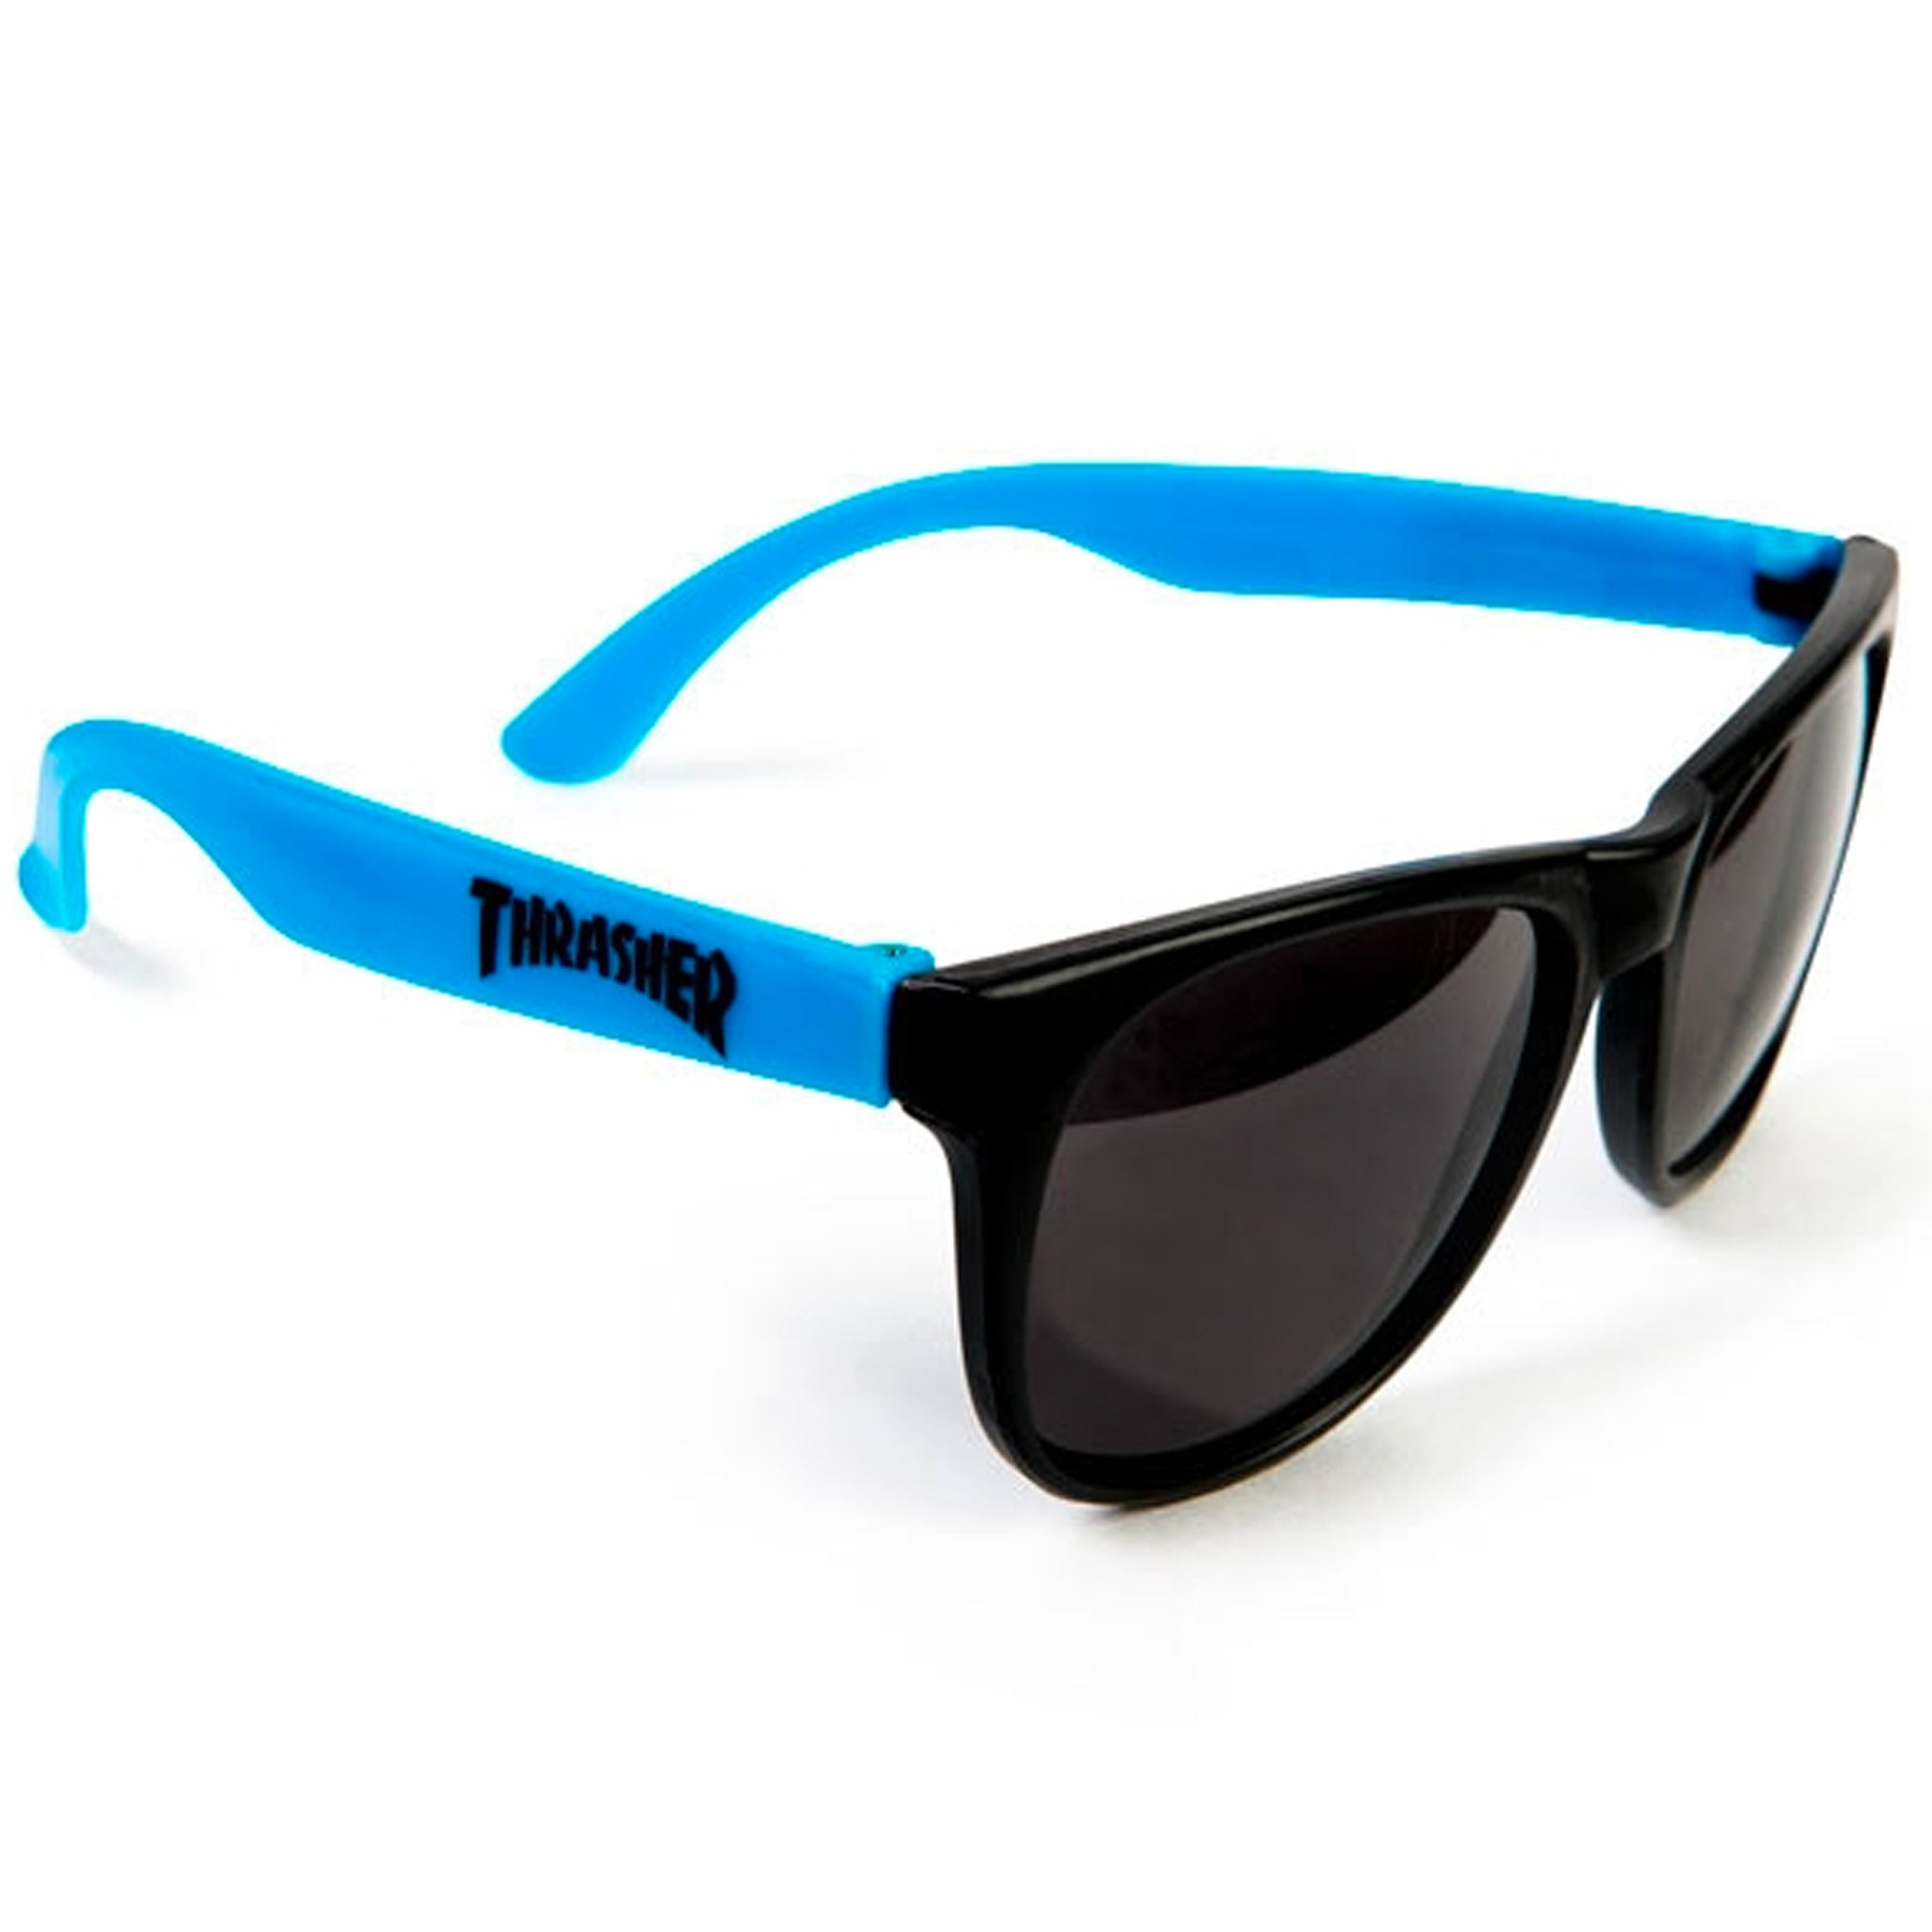 Thrasher Sunglasses Neon Blue Capsul 8750